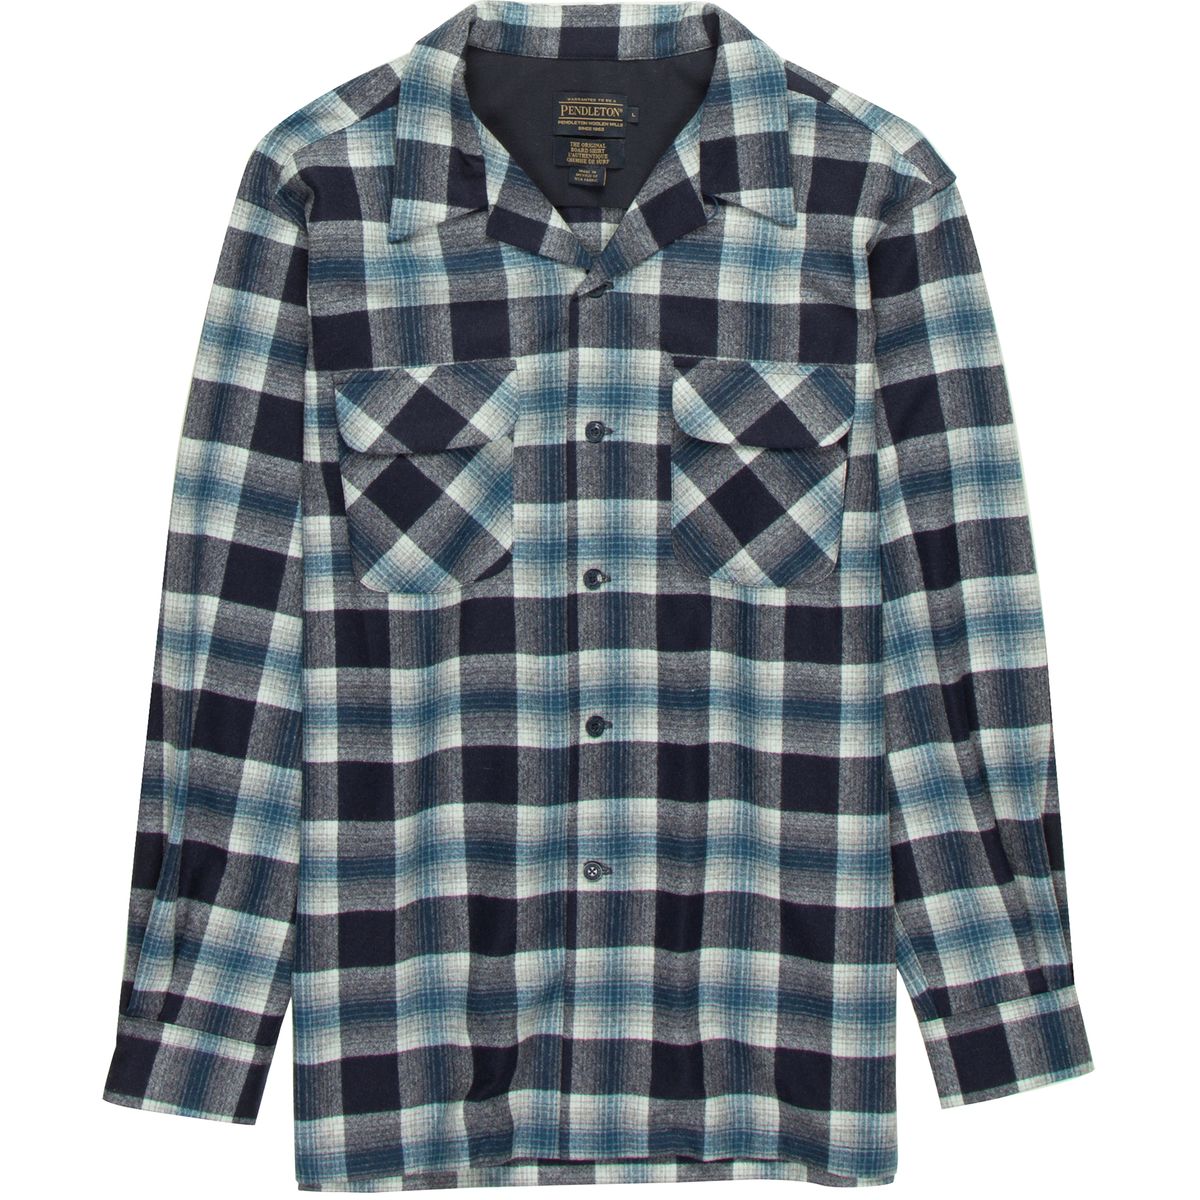 Pendleton Original Board Shirt in Ultrafine Merino Wool - Men's - Clothing